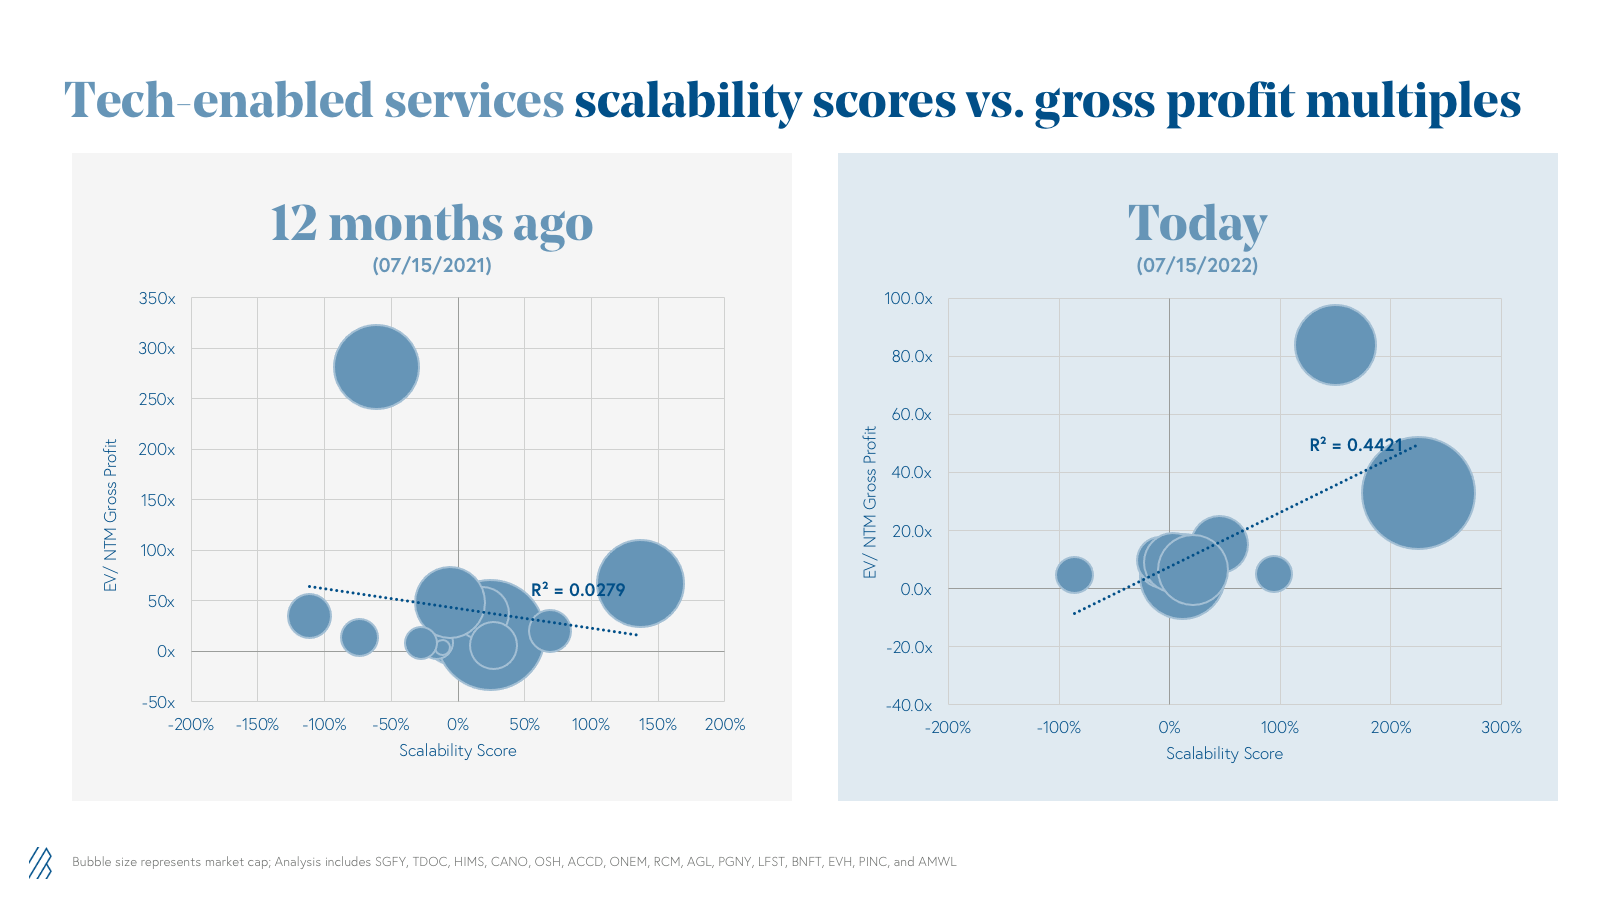 Tech-enabled services scalability scores vs. gross profit multiples